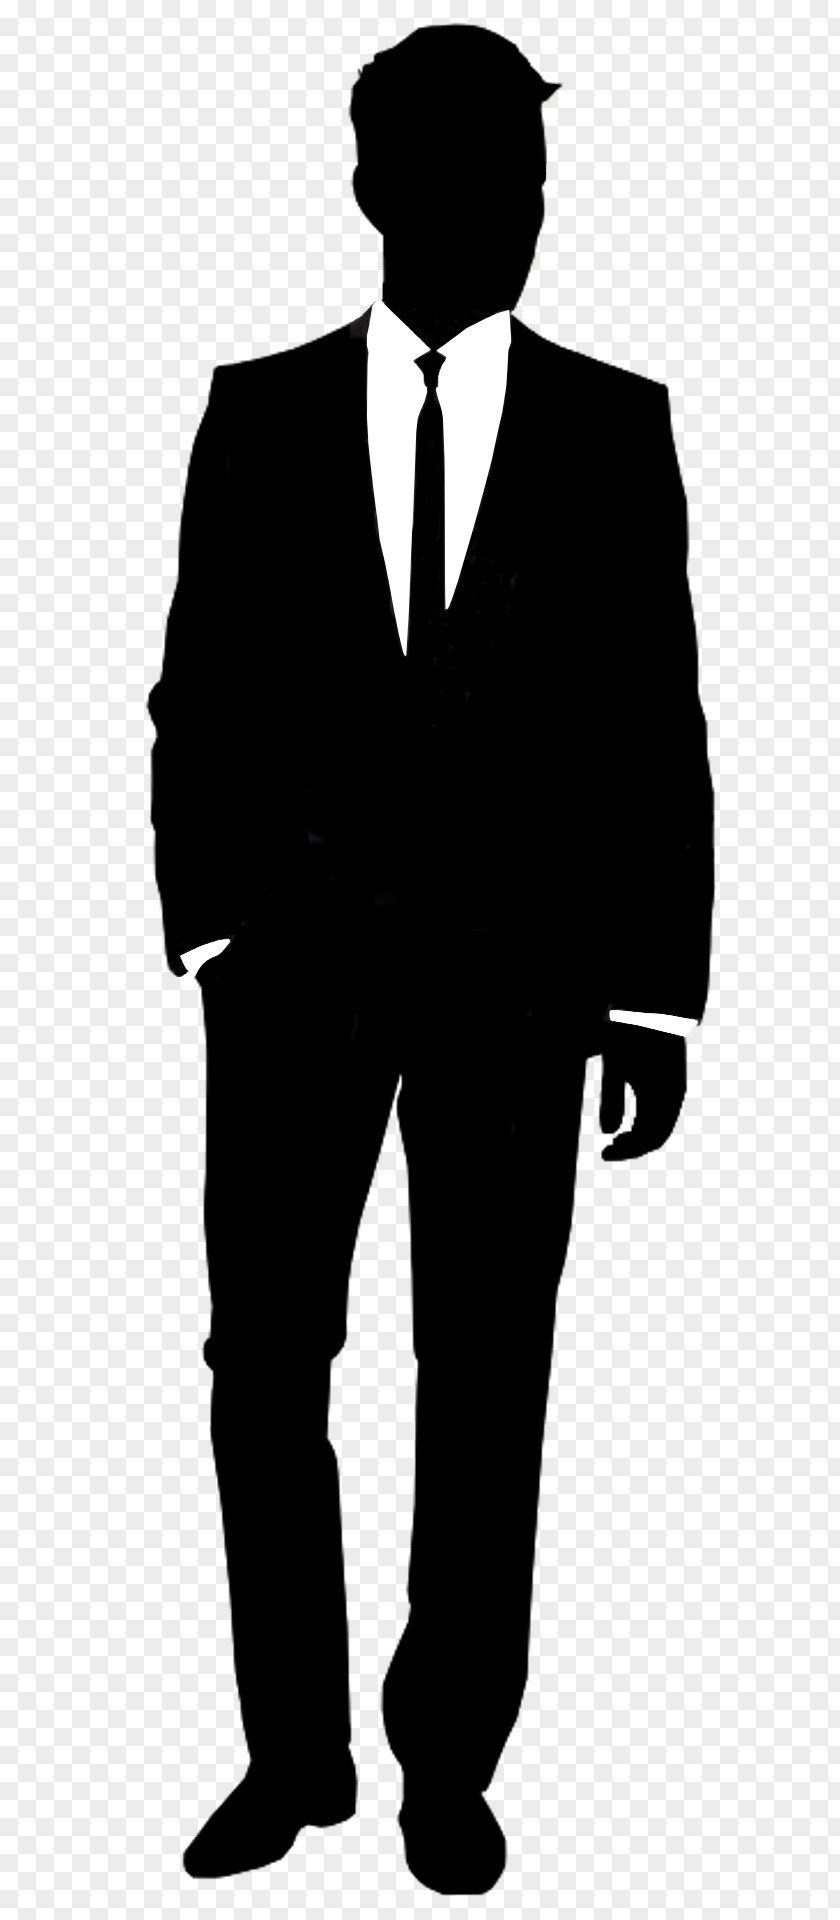 Gentleman Suit Silhouette Shirt Informal Attire PNG